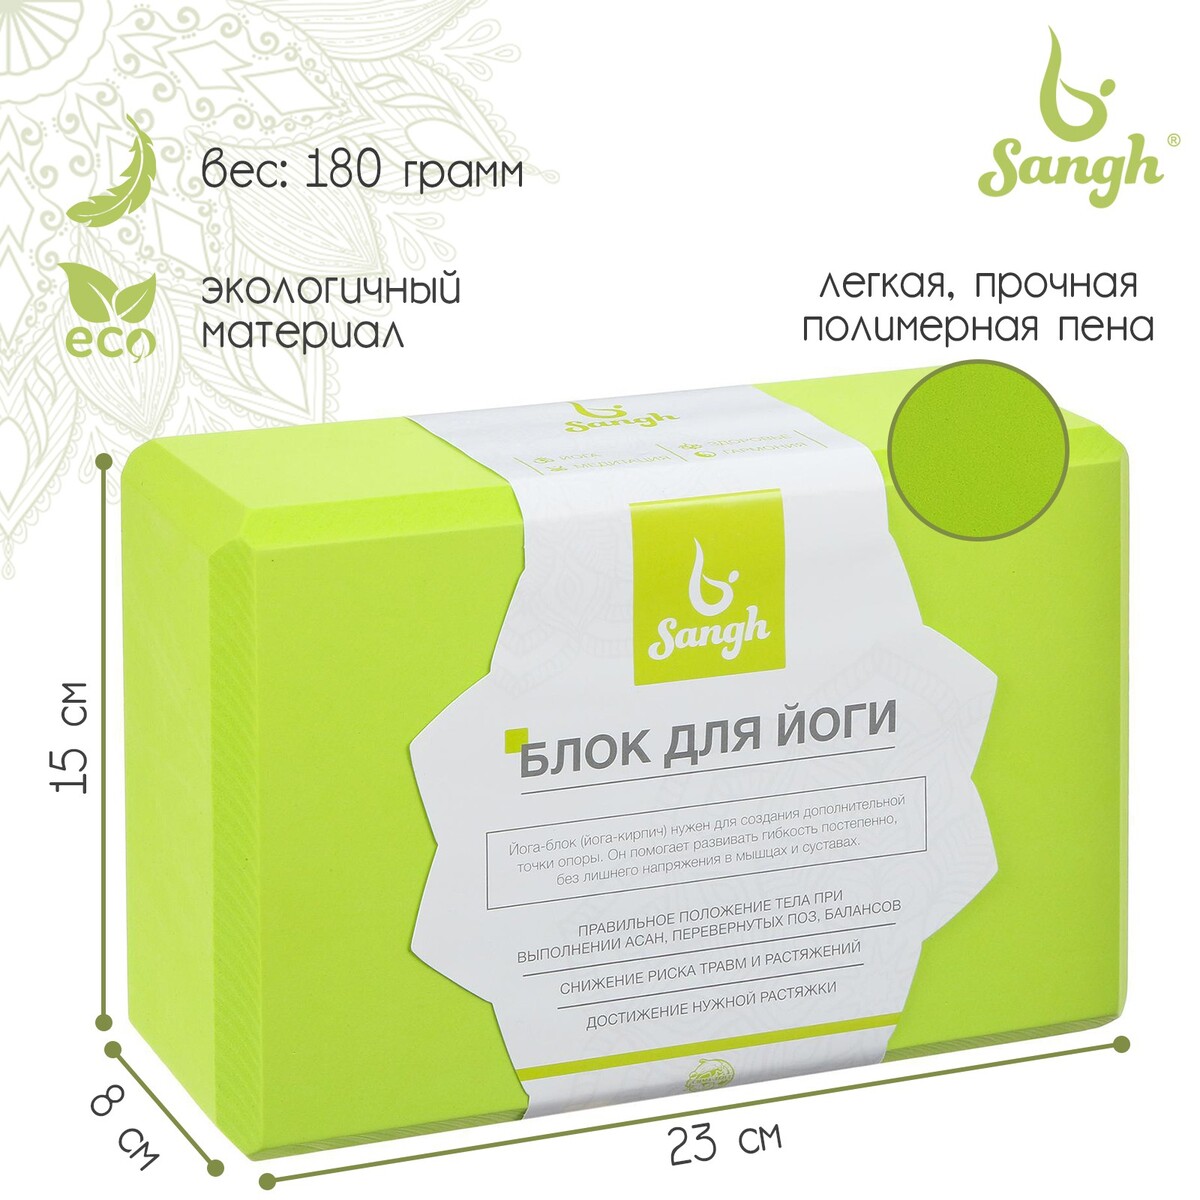 Блок для йоги sangh, 23х15х8 см, цвет зеленый блок для йоги sangh 23х15х8 см мятный